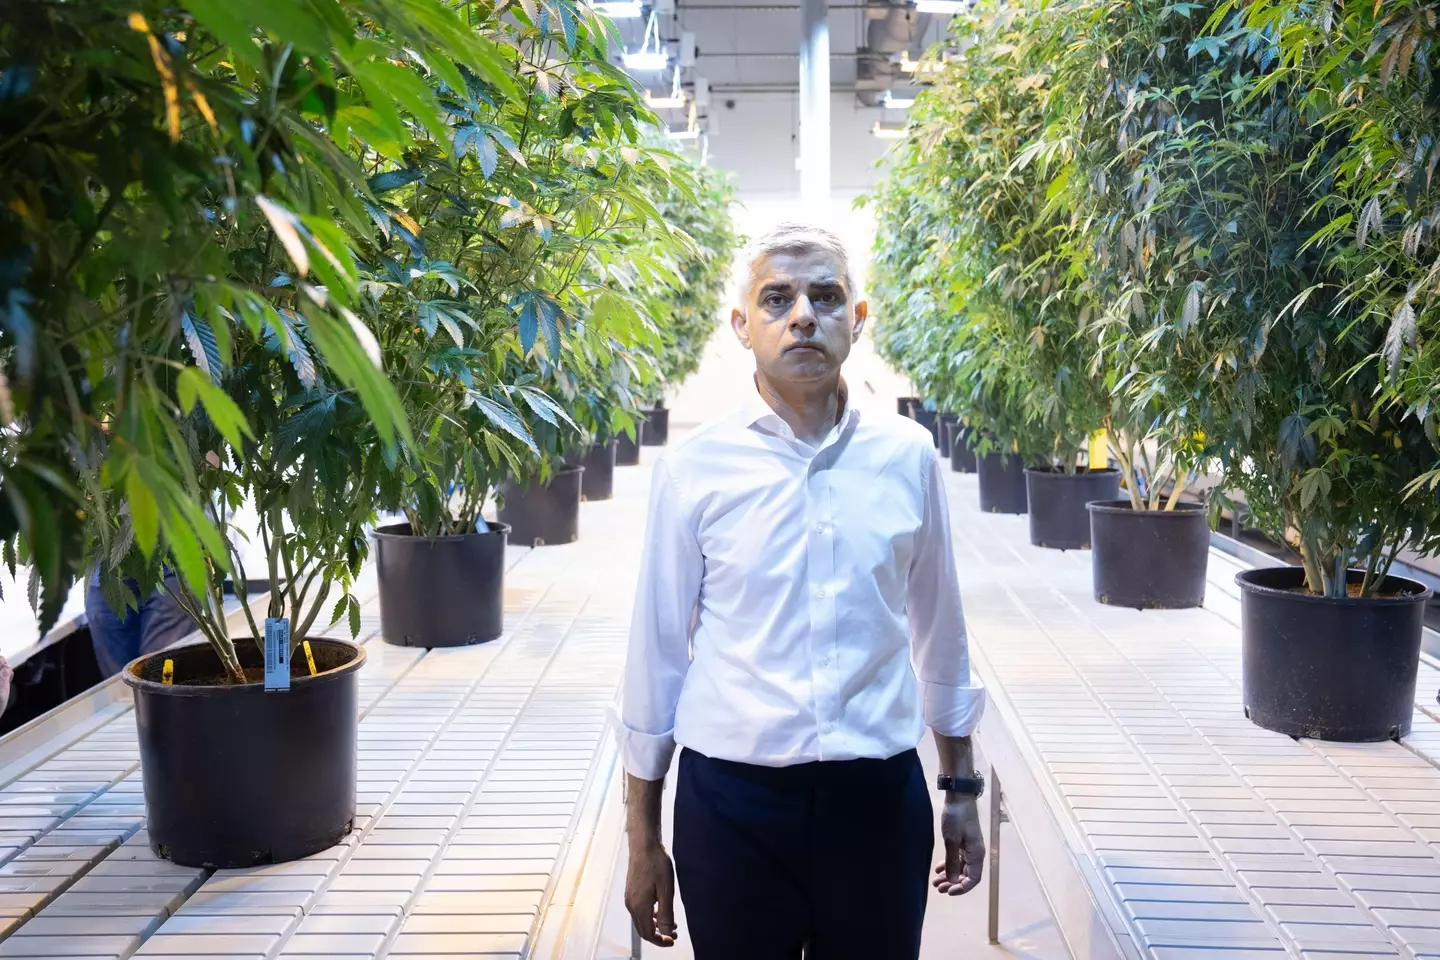 Sadiq Khan visited LA to study the impacts of cannabis.